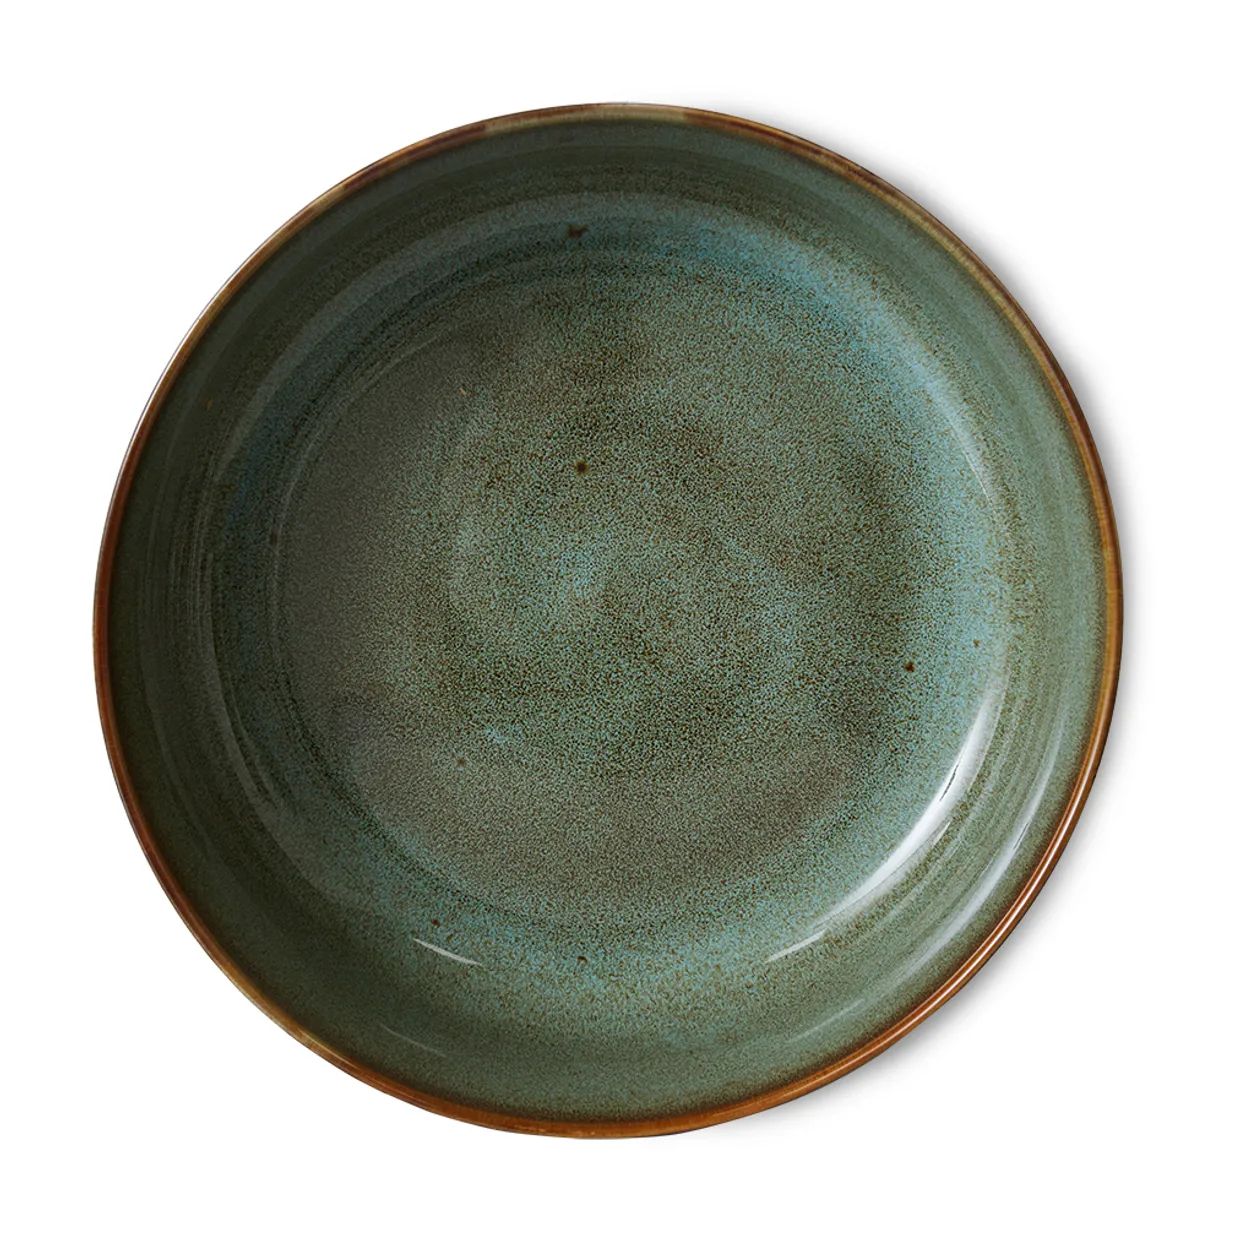 70s ceramics: salad bowl, rock on